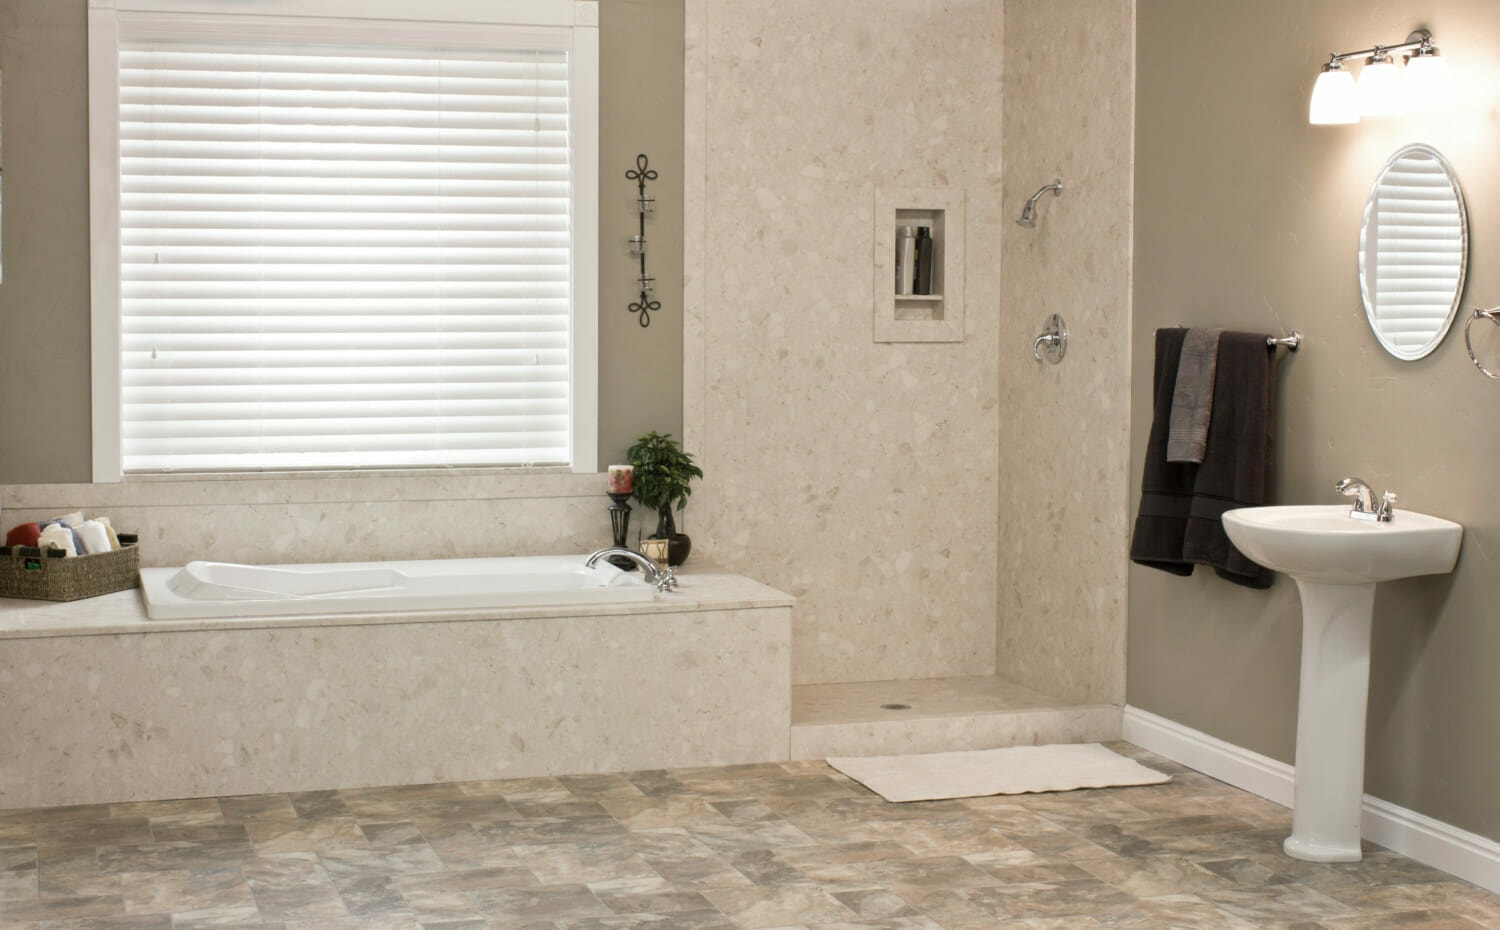 Five Star Bath Solutions of Johnson City Lifetime Warranty, Waterproof for life